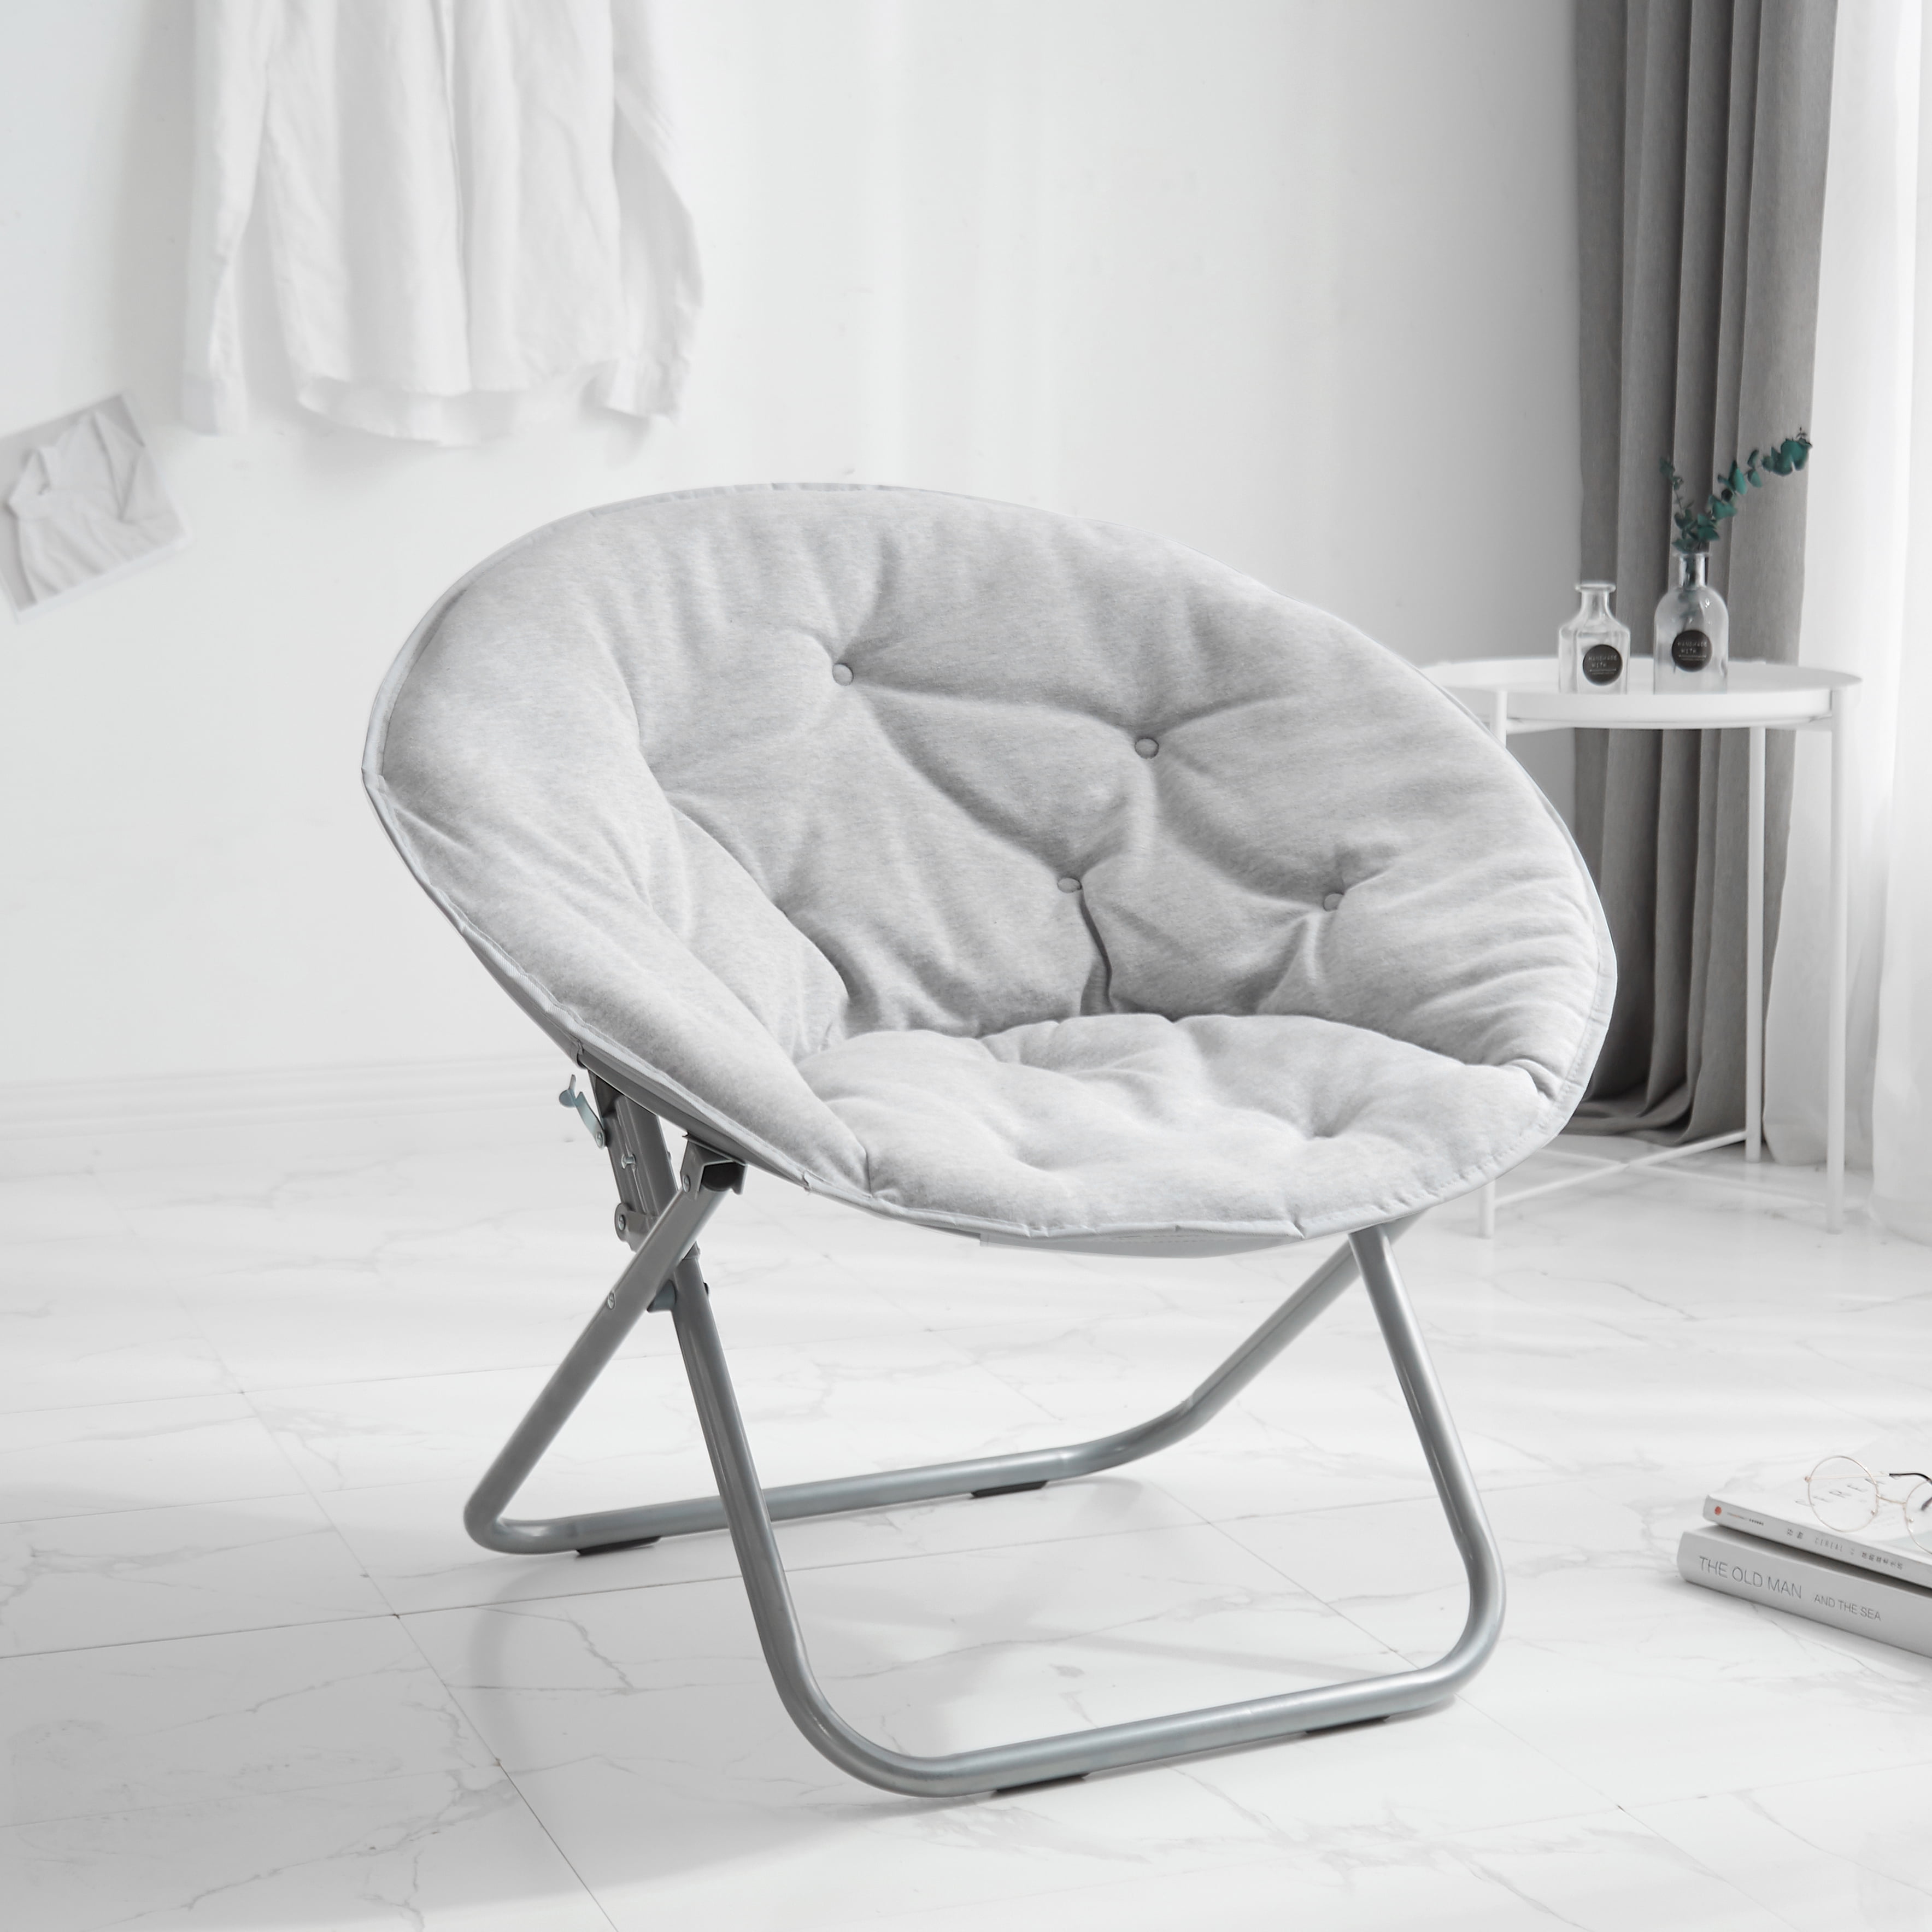 Grey Urban Shop Bungee Chair